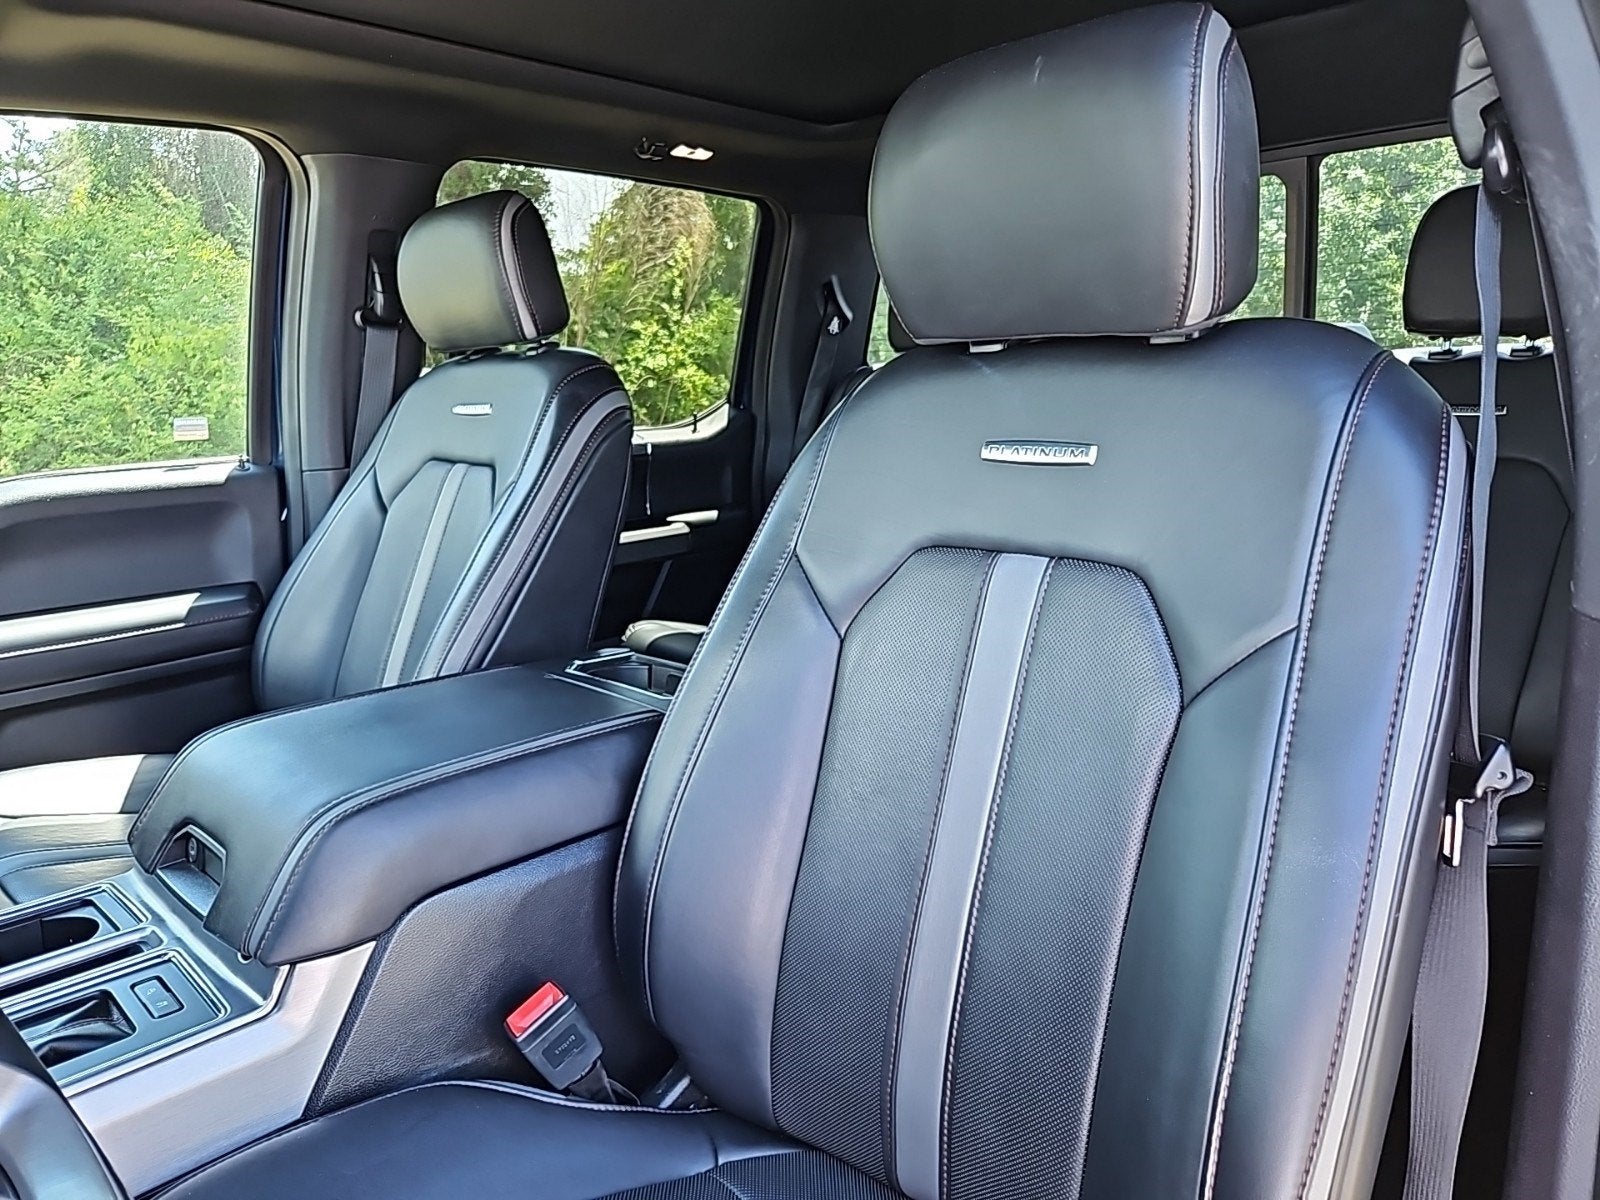 2019 Ford F-150 FX4 Platinum 4WD w/ Nav & Panoramic Sunroof